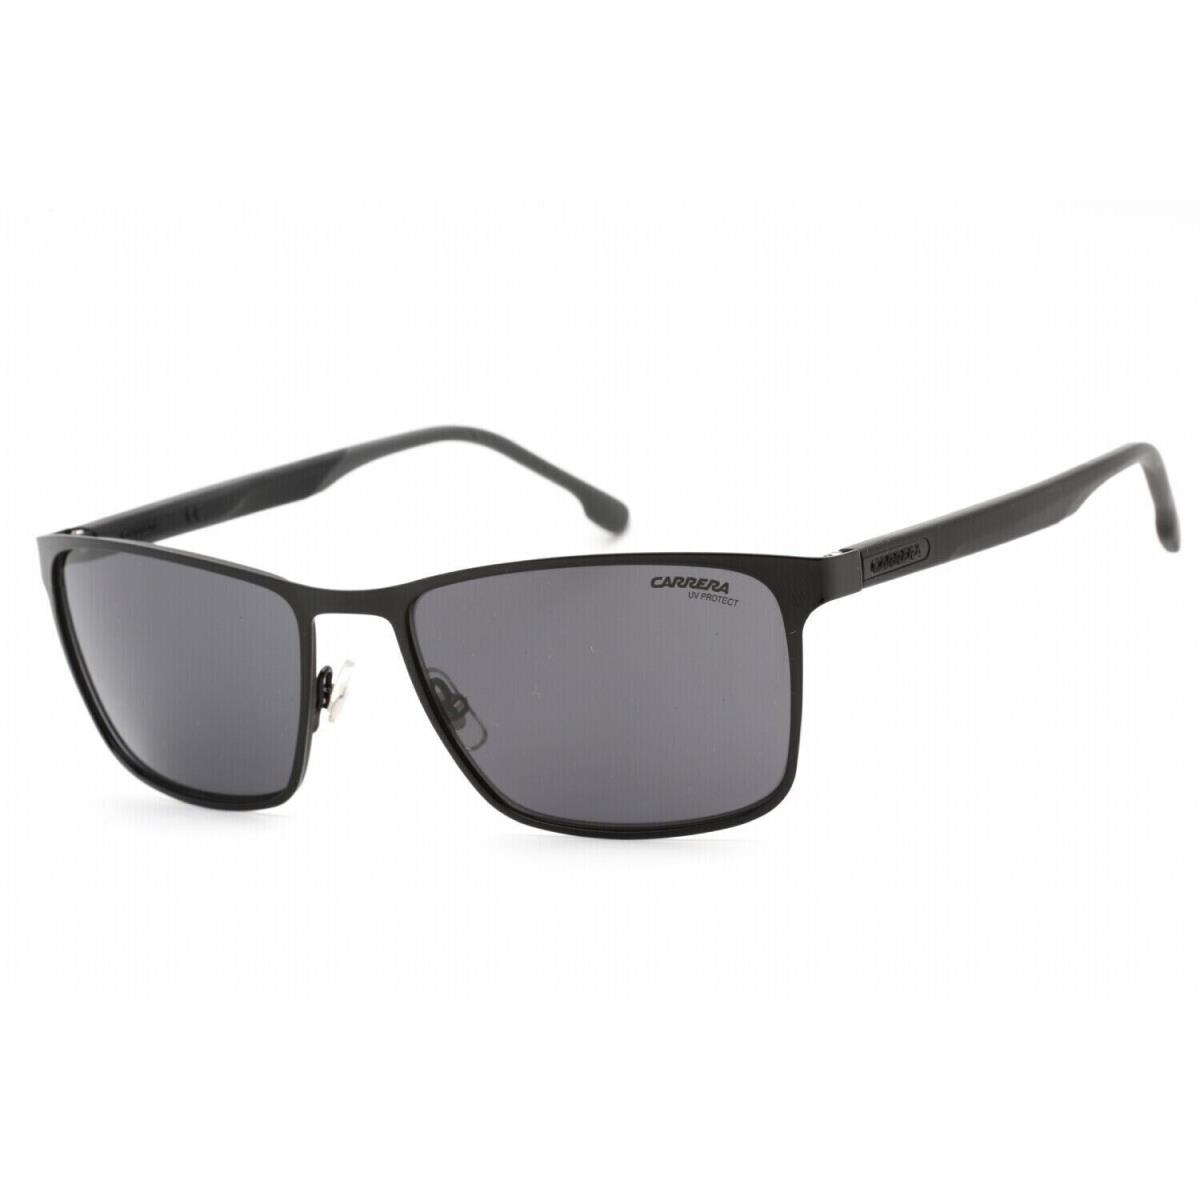 Carrera Sunglasses 8048 807 IR 58mm Black Frame Grey Lens St Steel Unisex